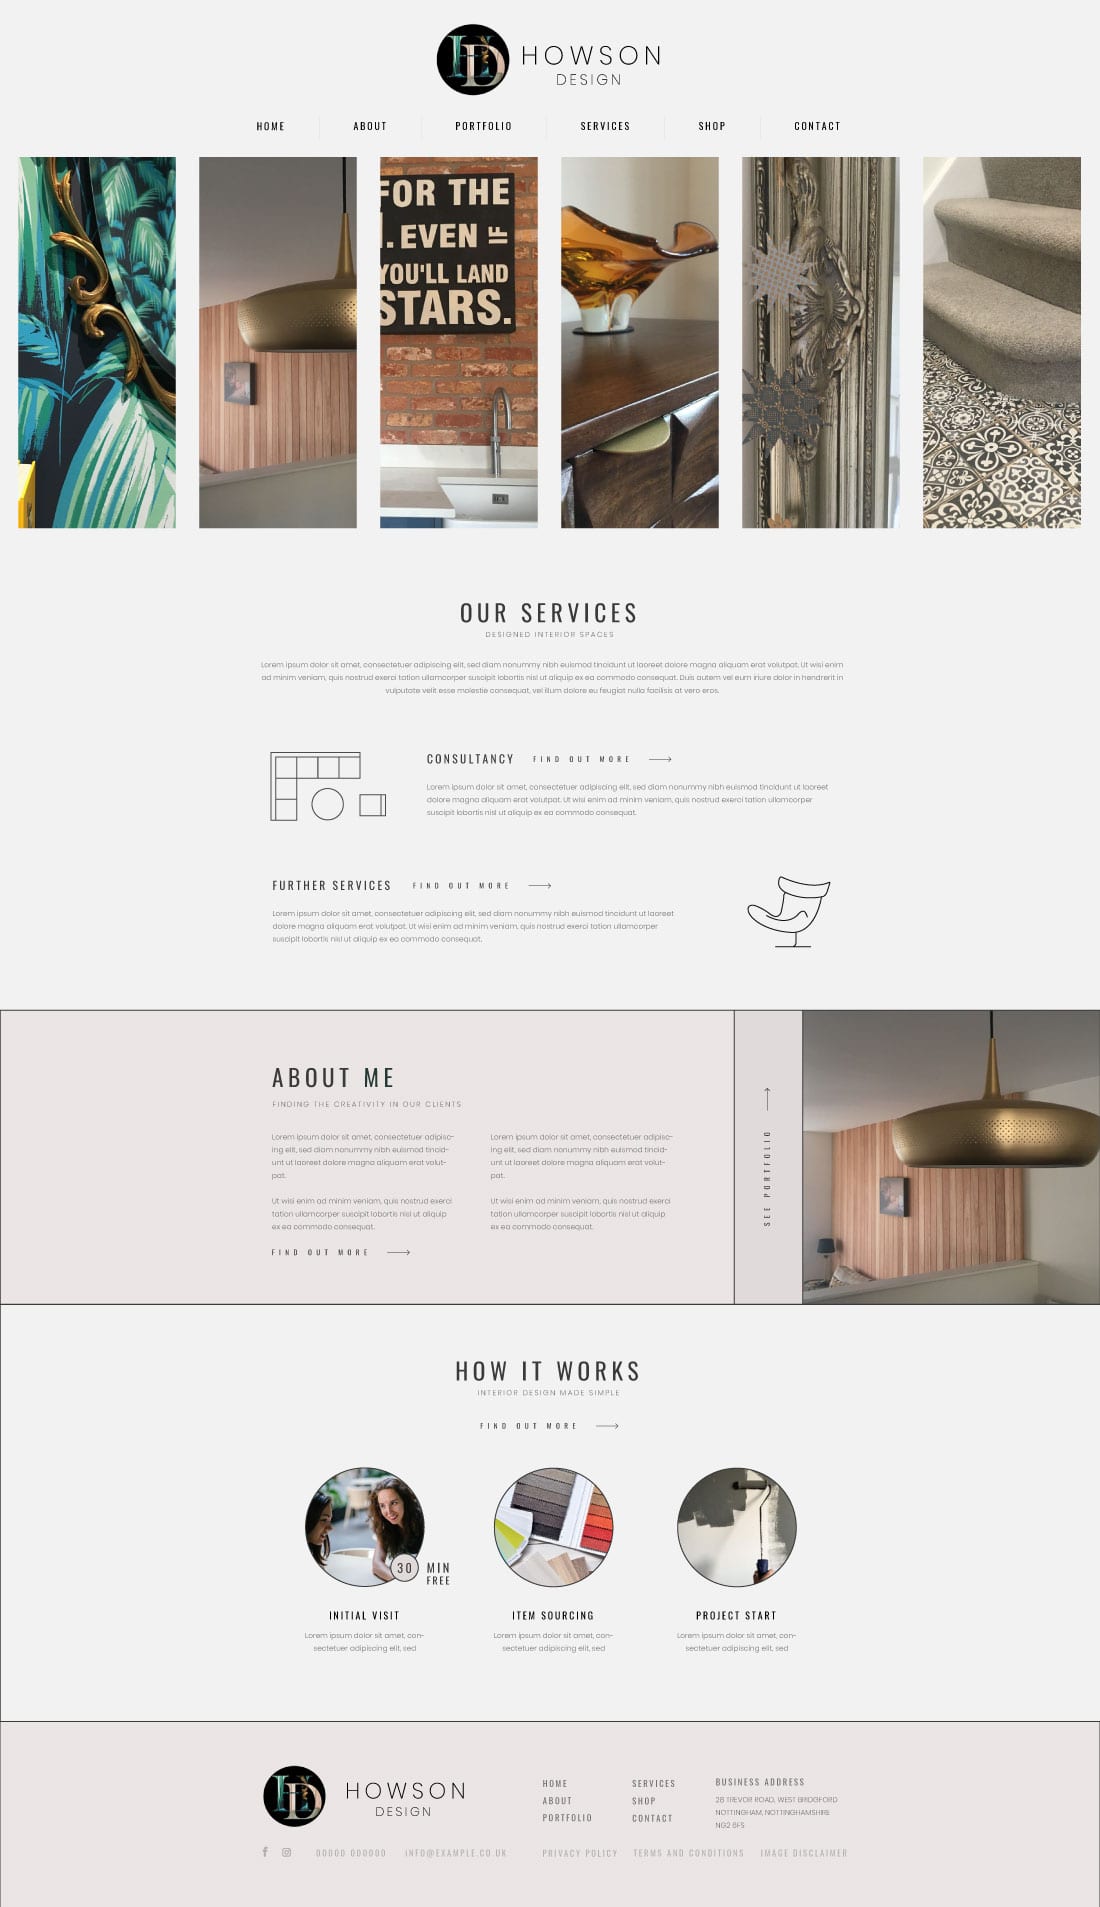 Howson Design website layout design, full